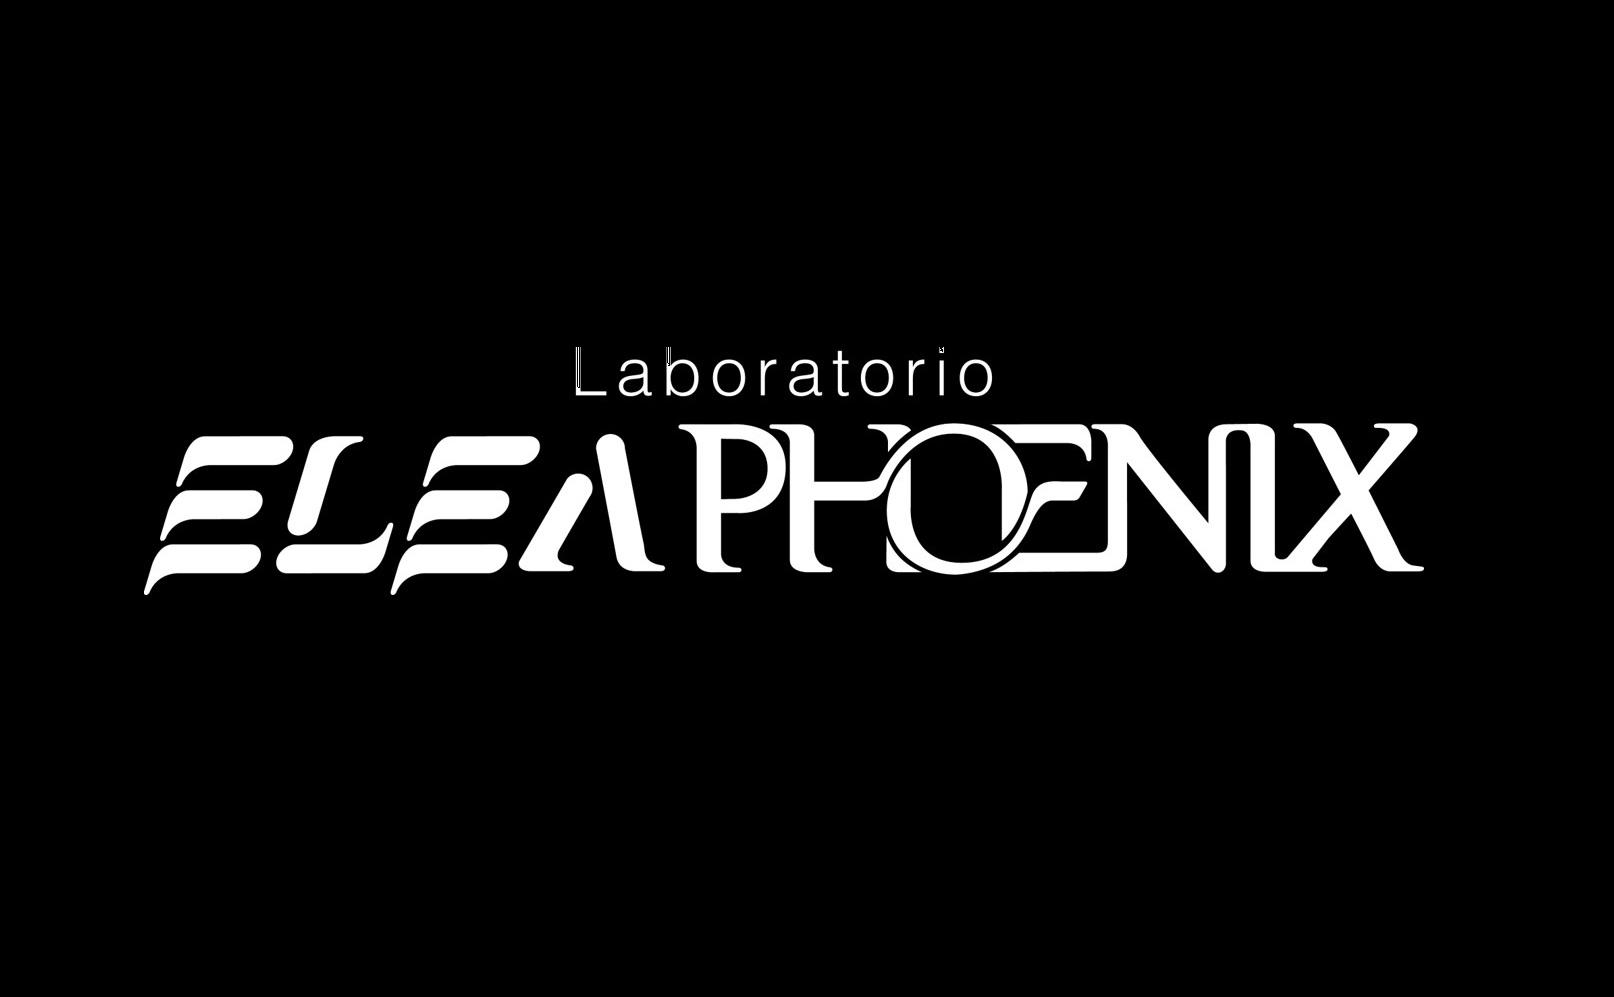 Laboratorio Elea Phoenix